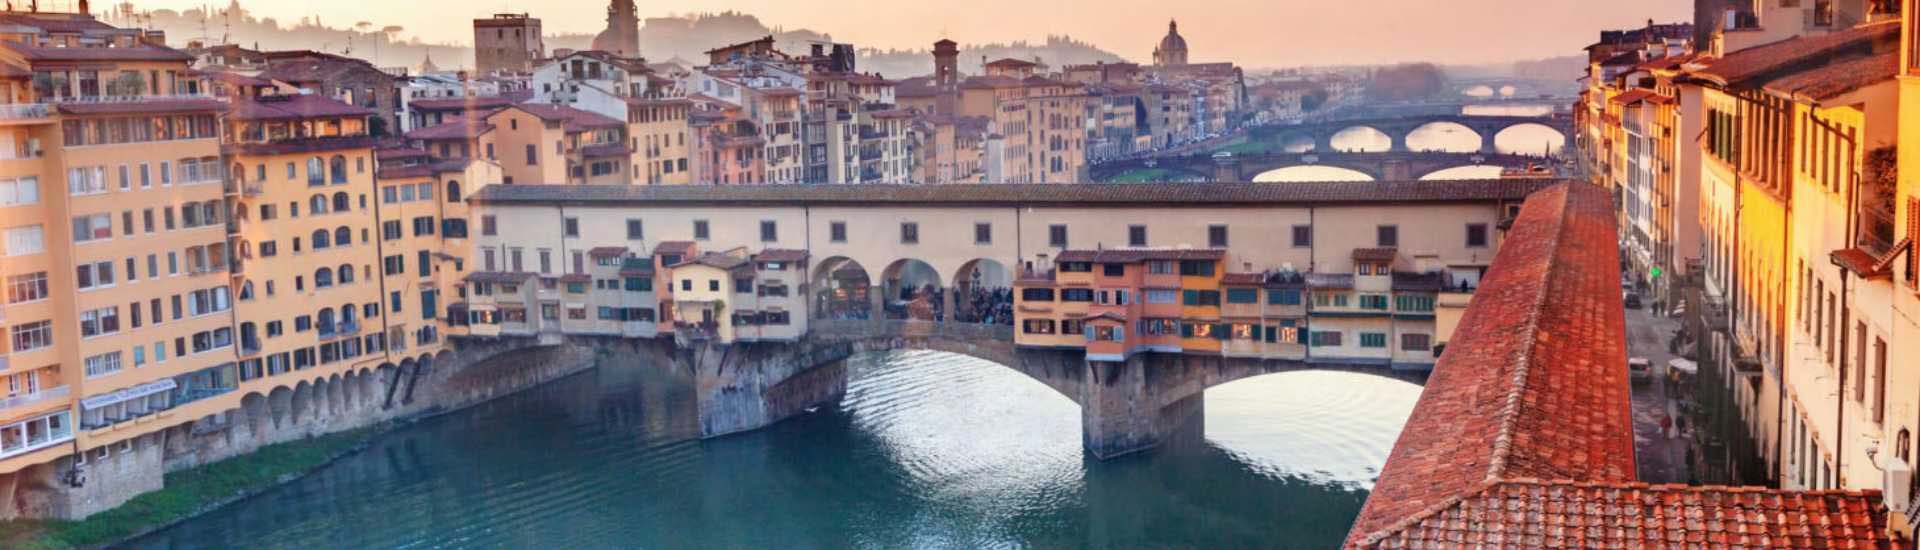 De prachtige stad Florence